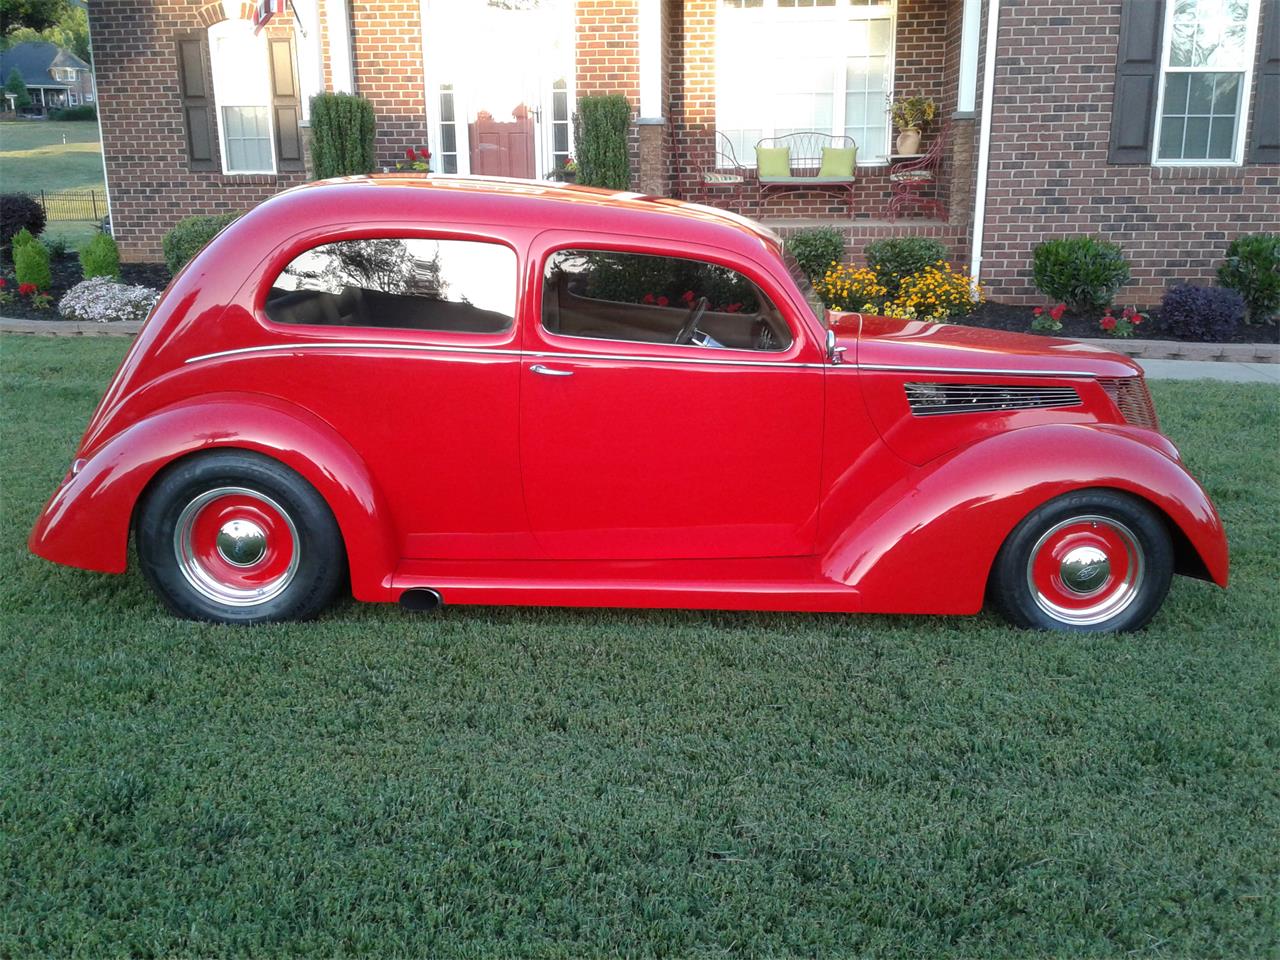 1937 Ford Slantback for sale in Mooresville, NC ...